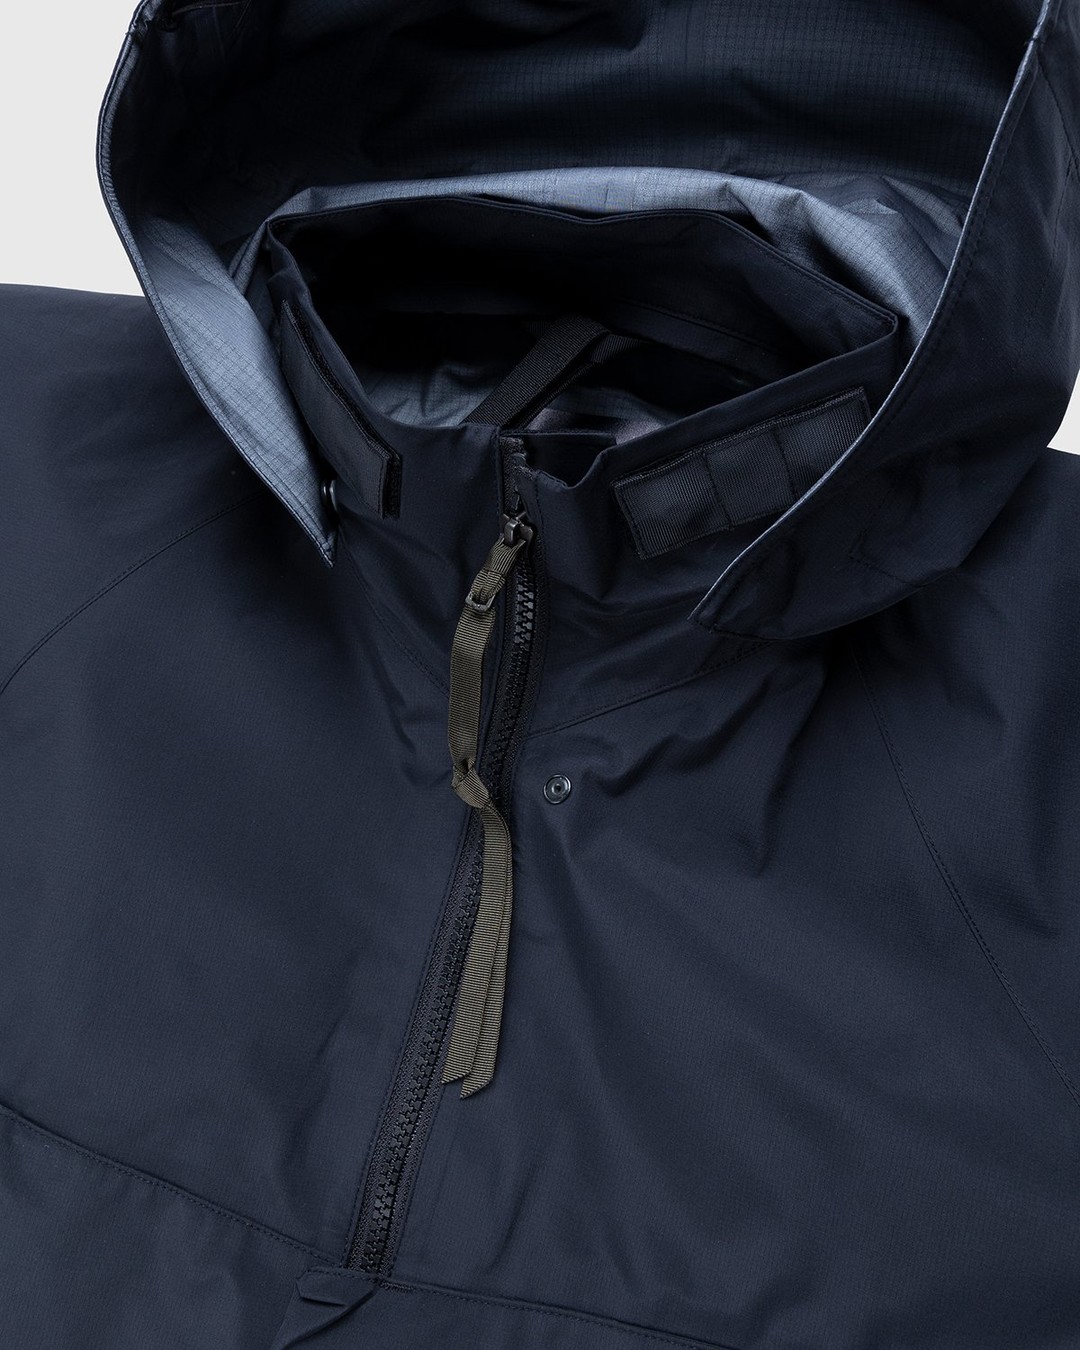 ACRONYM – J96-GT Jacket Black - Outerwear - Black - Image 5